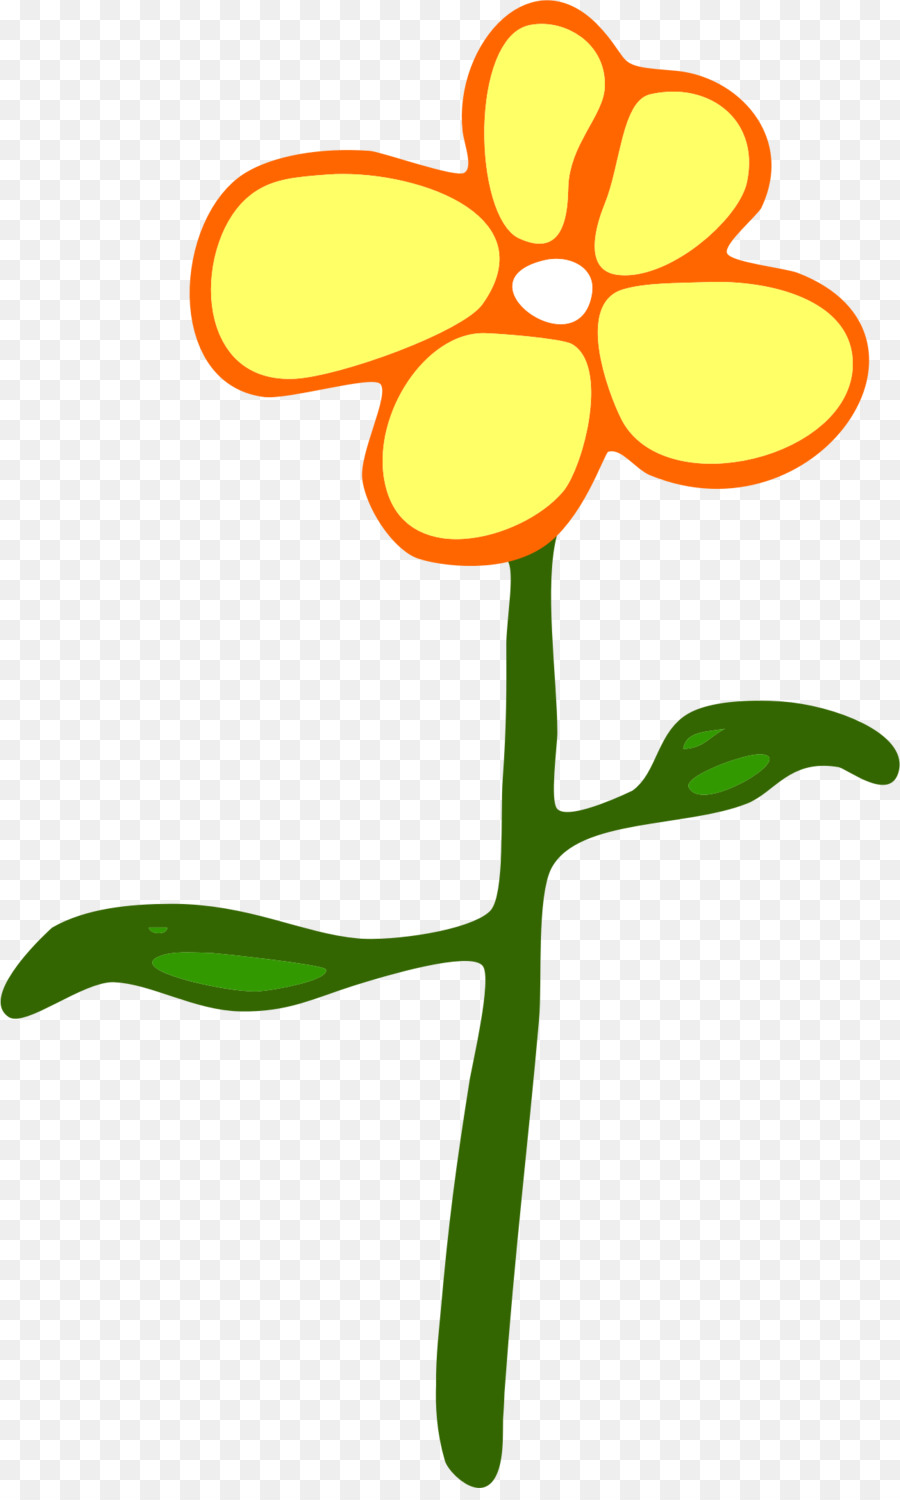 Flower Cartoon Yellow Clip art - cartoon flowers png download - 1296*2143 - Free Transparent Flower png Download.